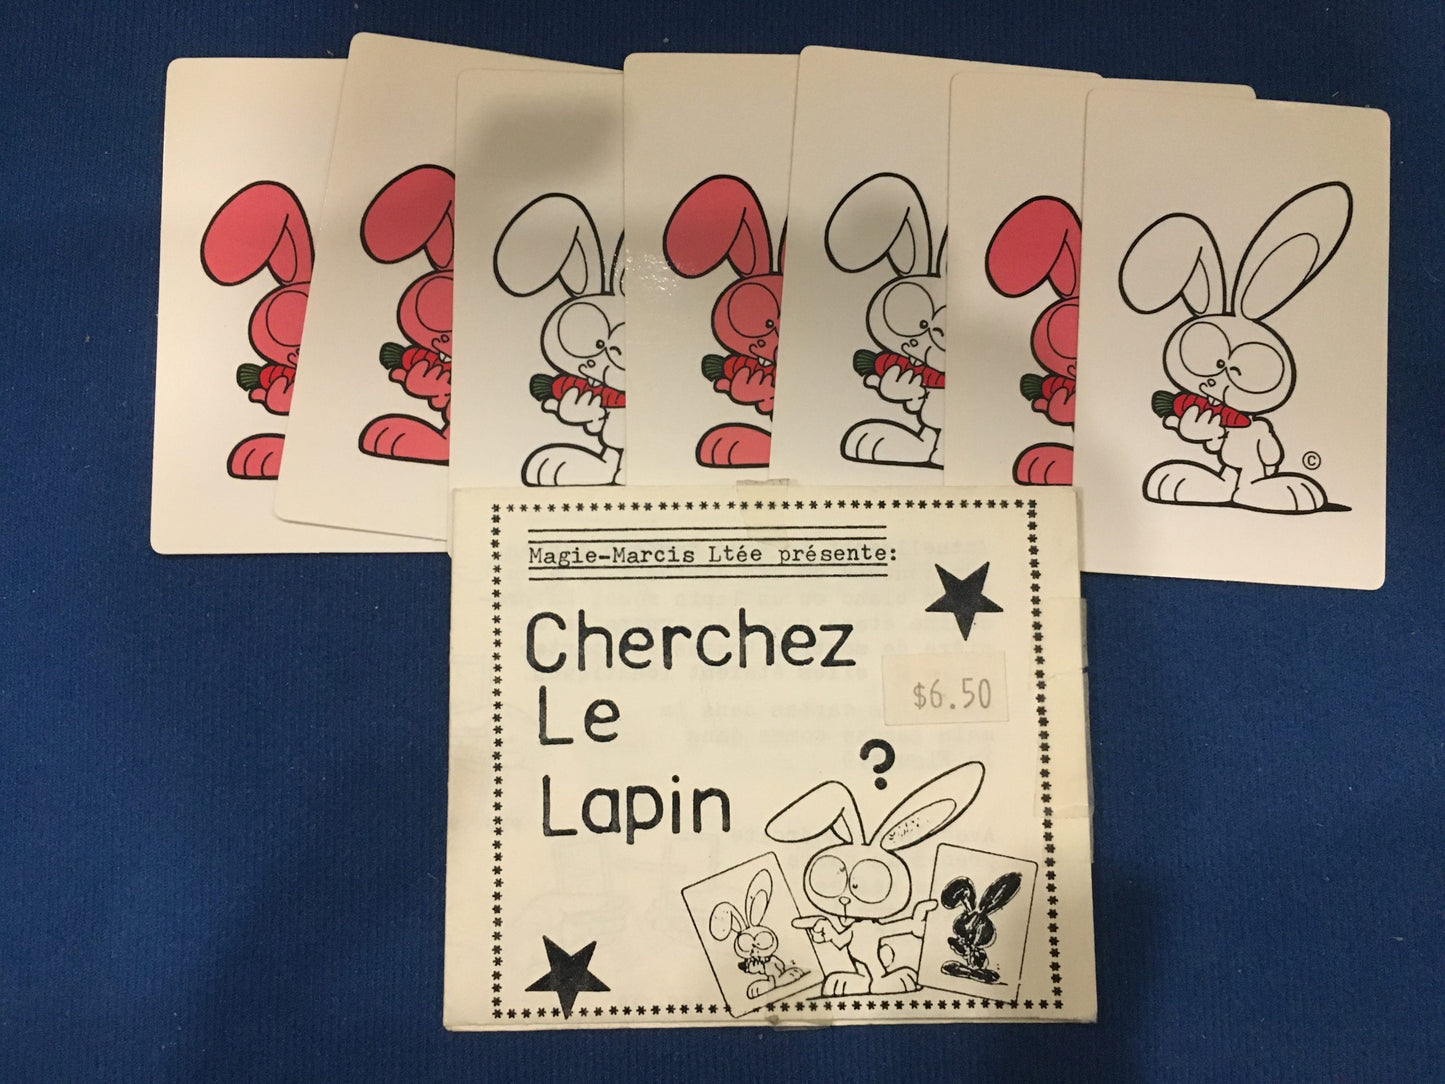 Cherchez Le Lapin packet trick, used